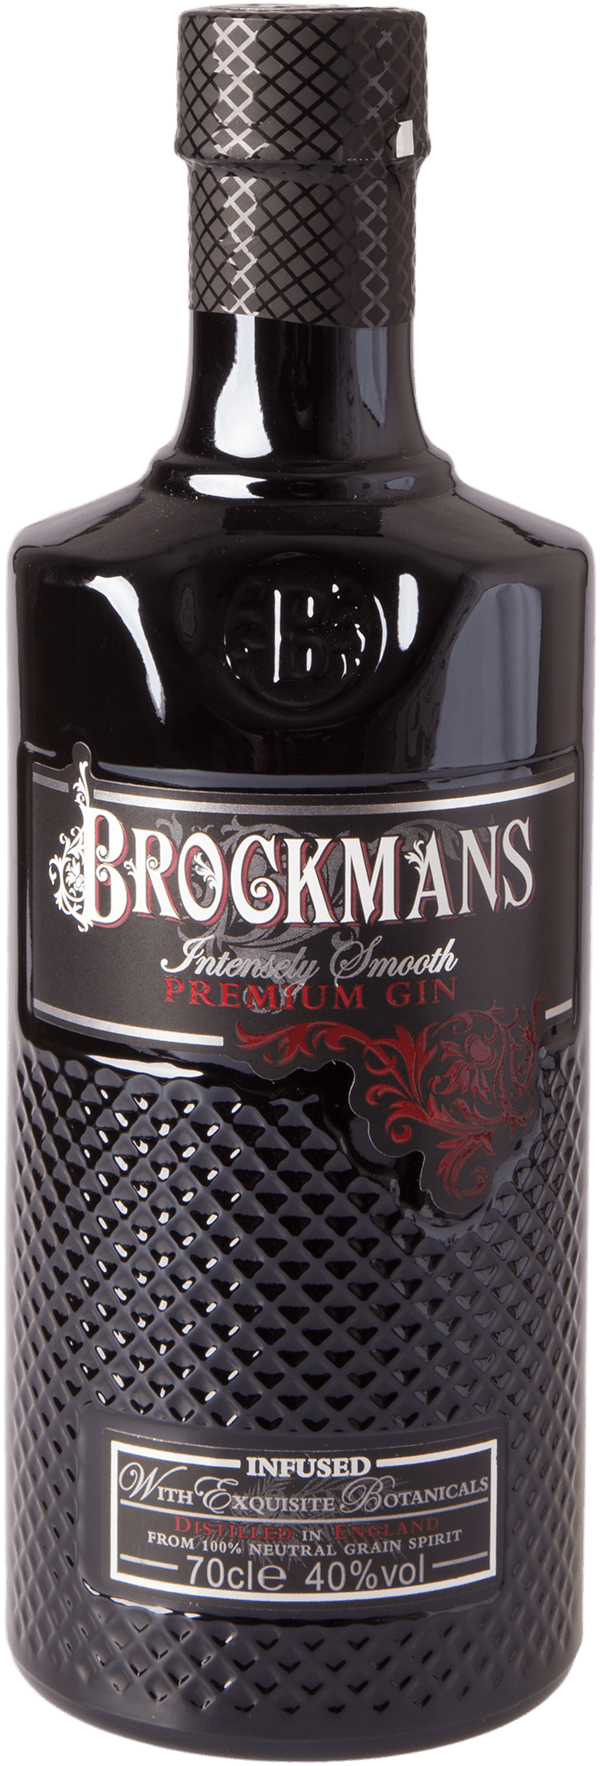 Brockmans Intensely Smooth Premium Gin 40% 0,7L Shop